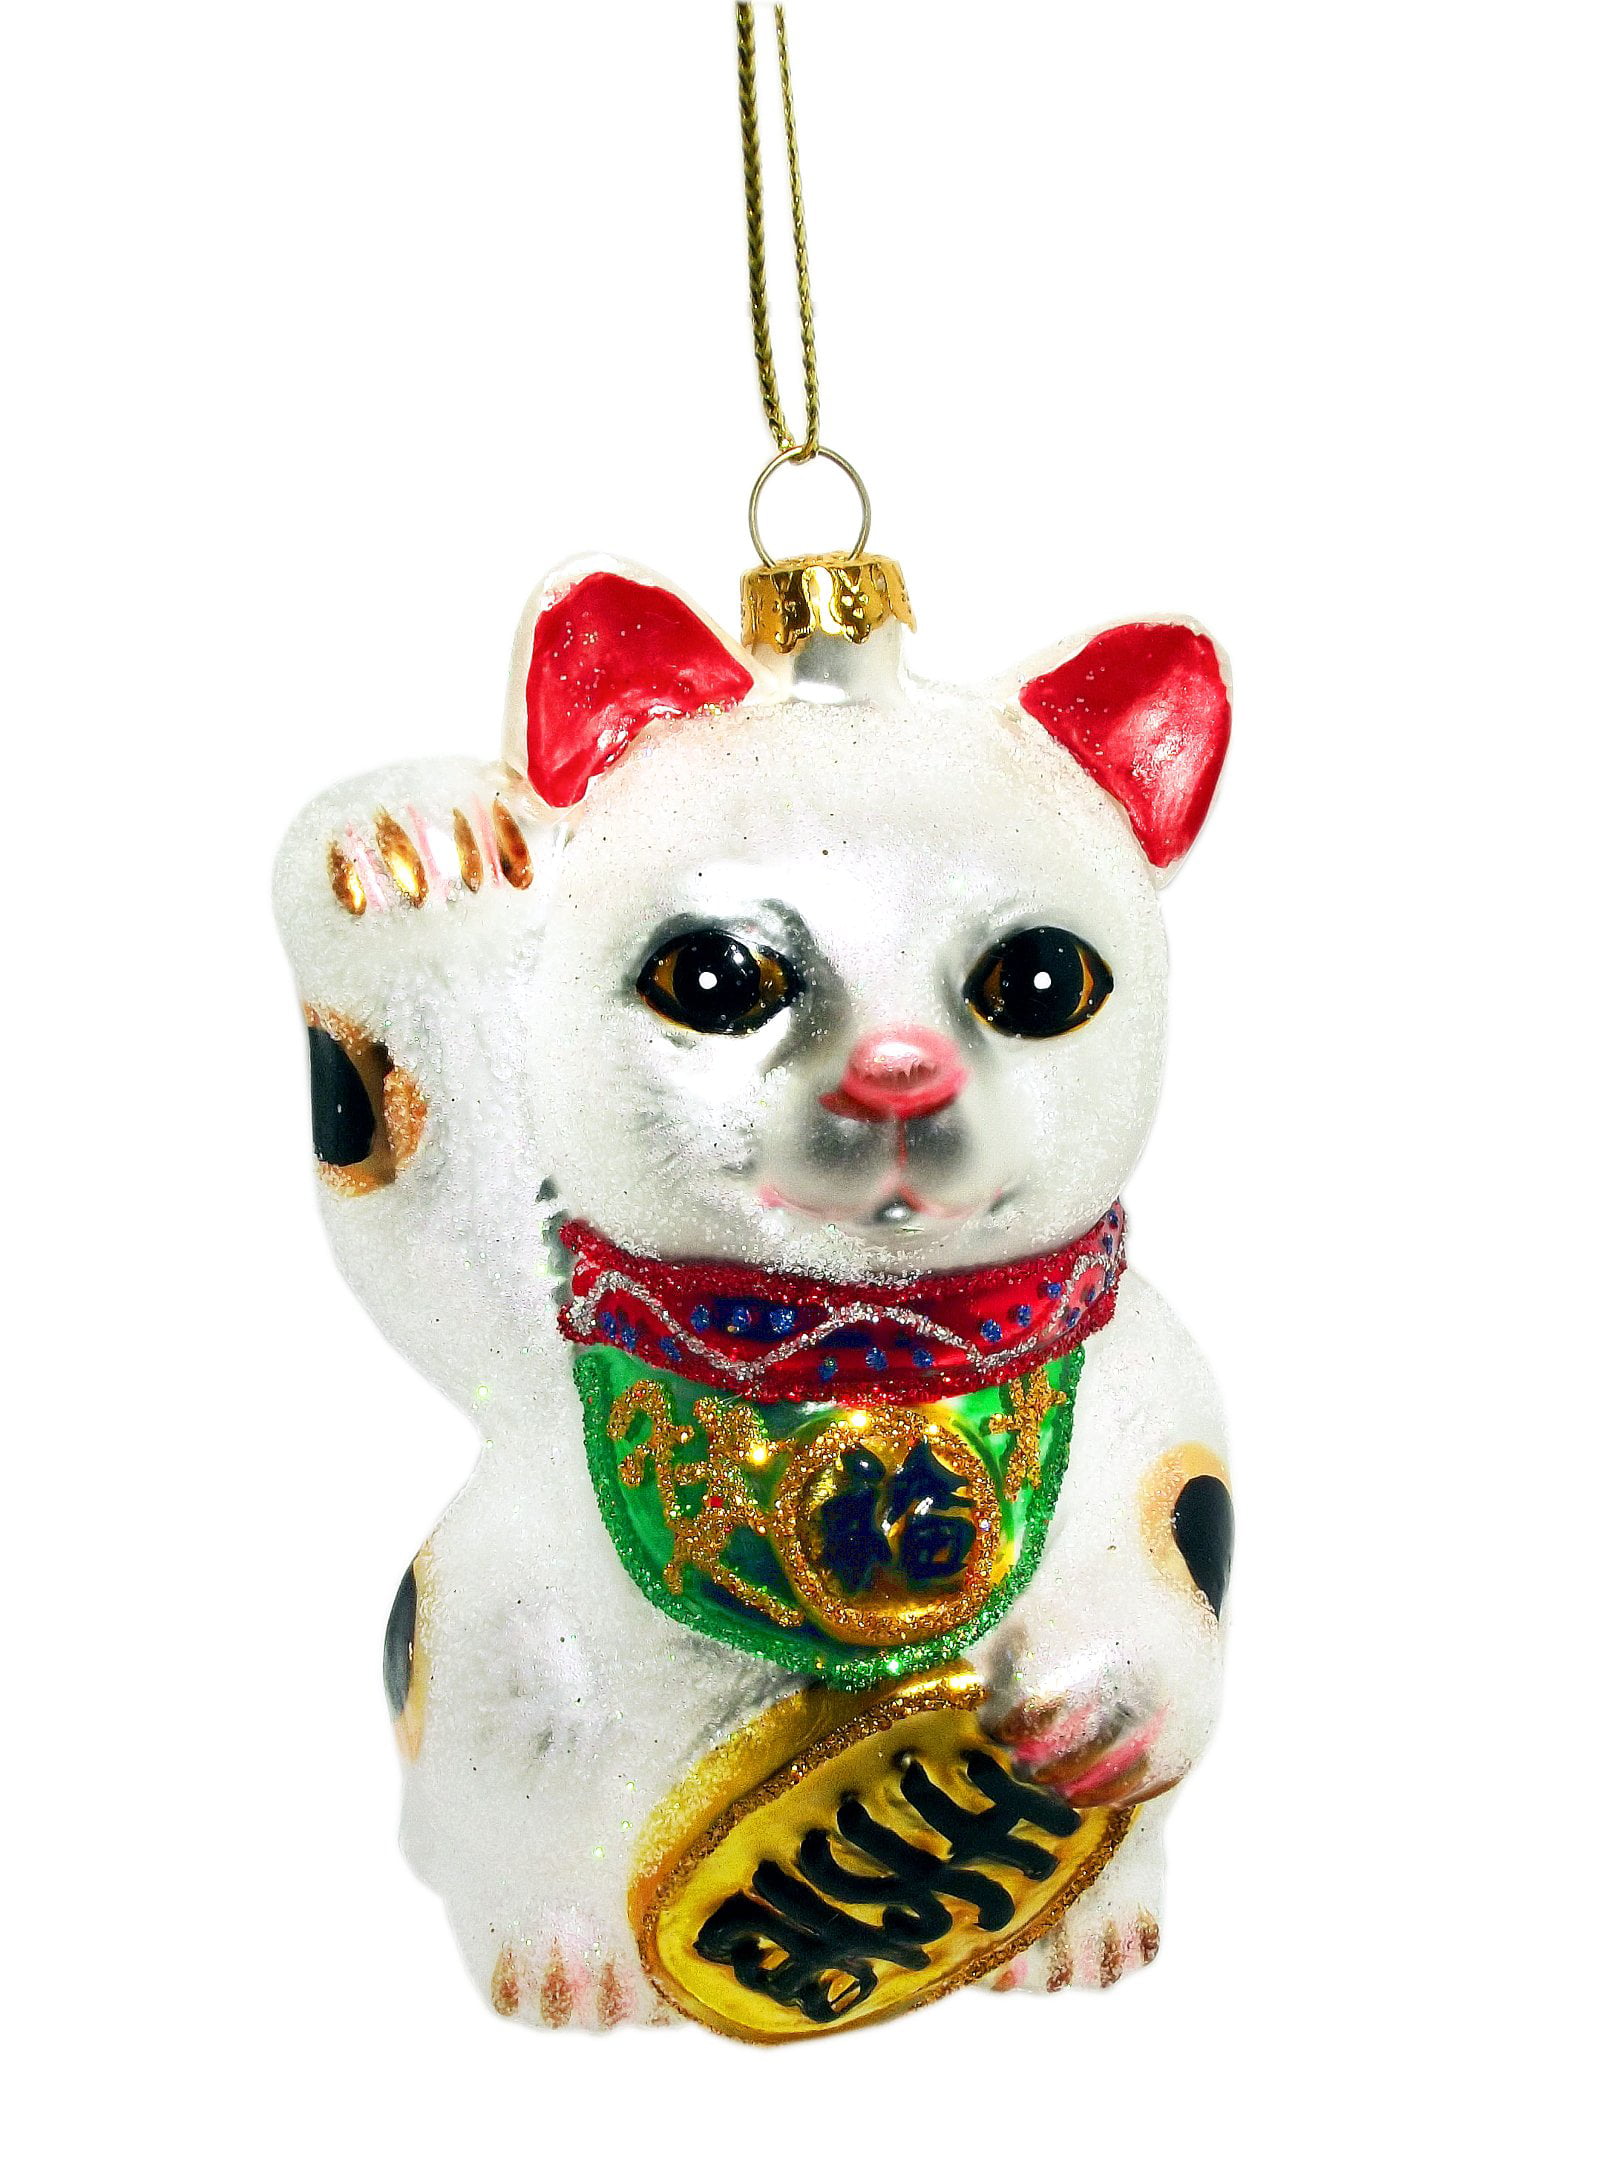 4 Glittered Chinese Money Cat  Ornament Walmart com 